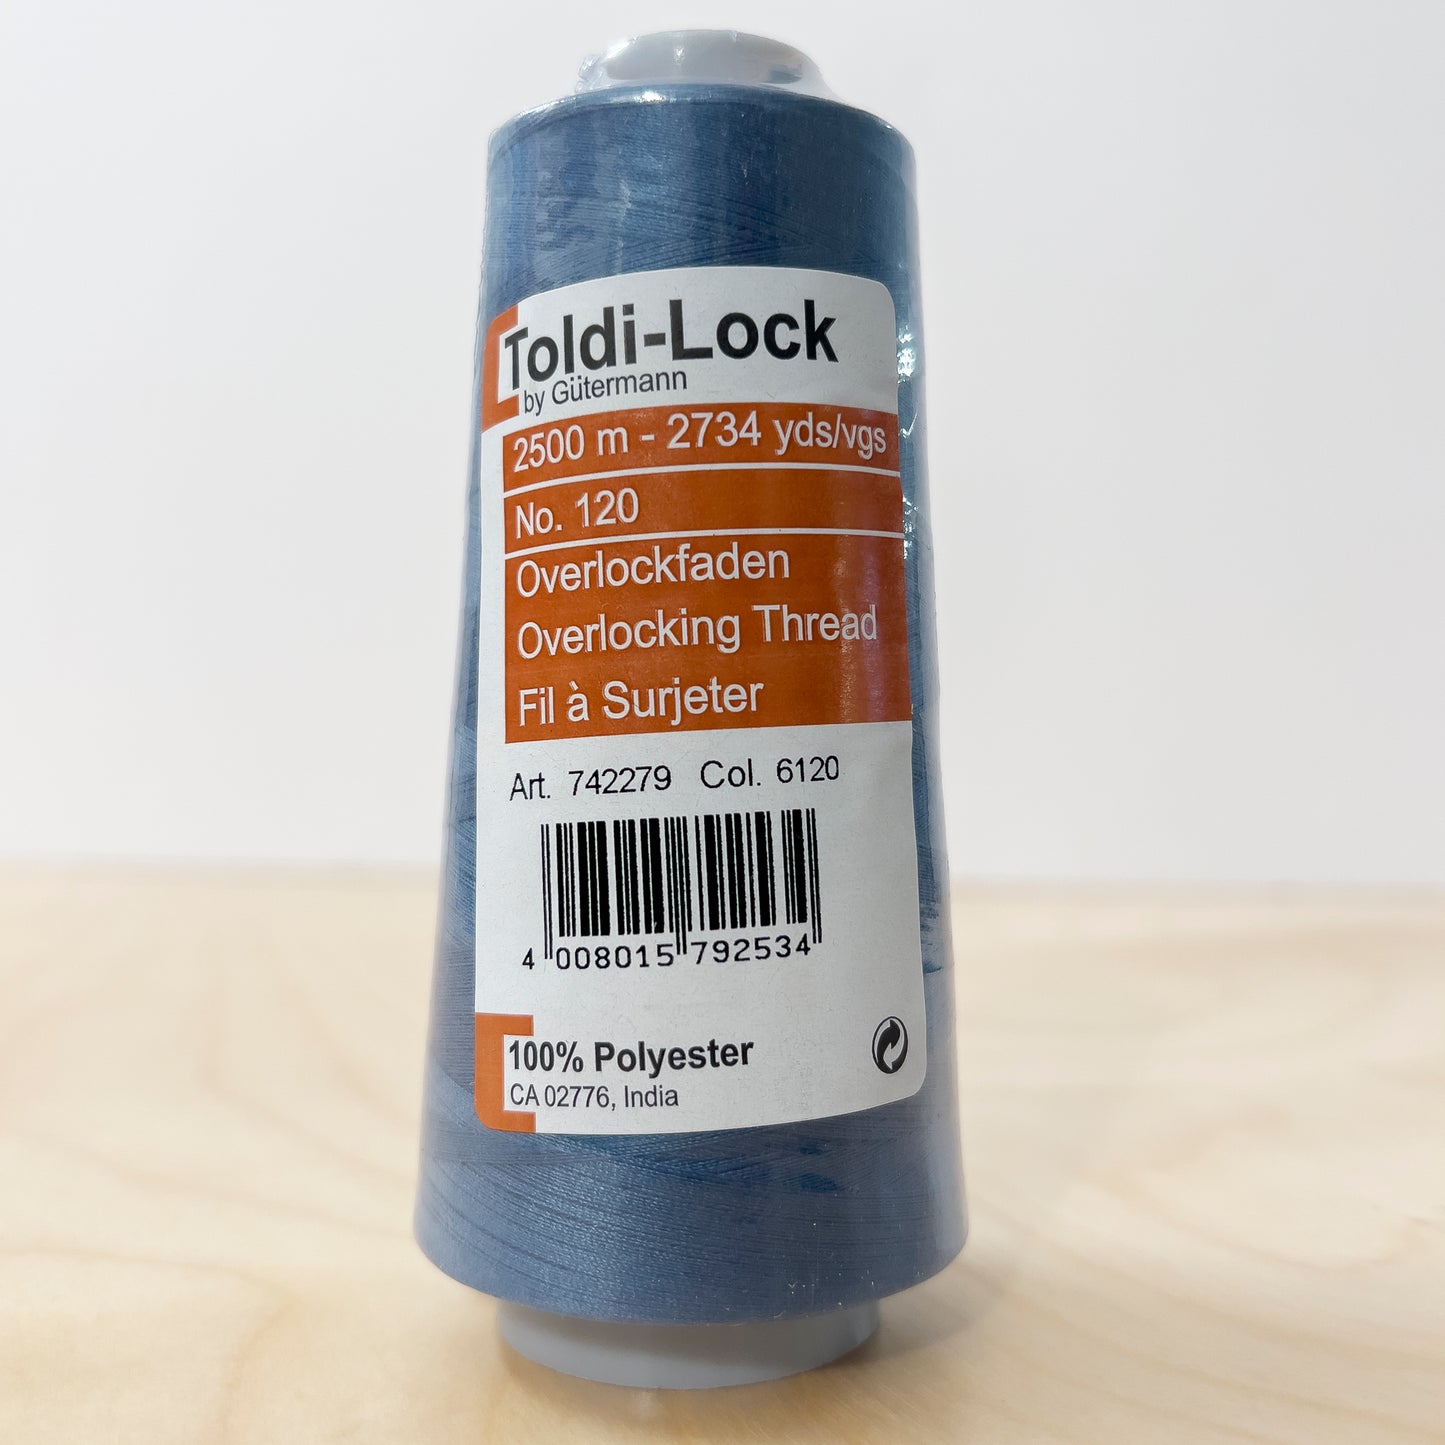 Toldi-Lock Serger Thread in Slate Blue #6120